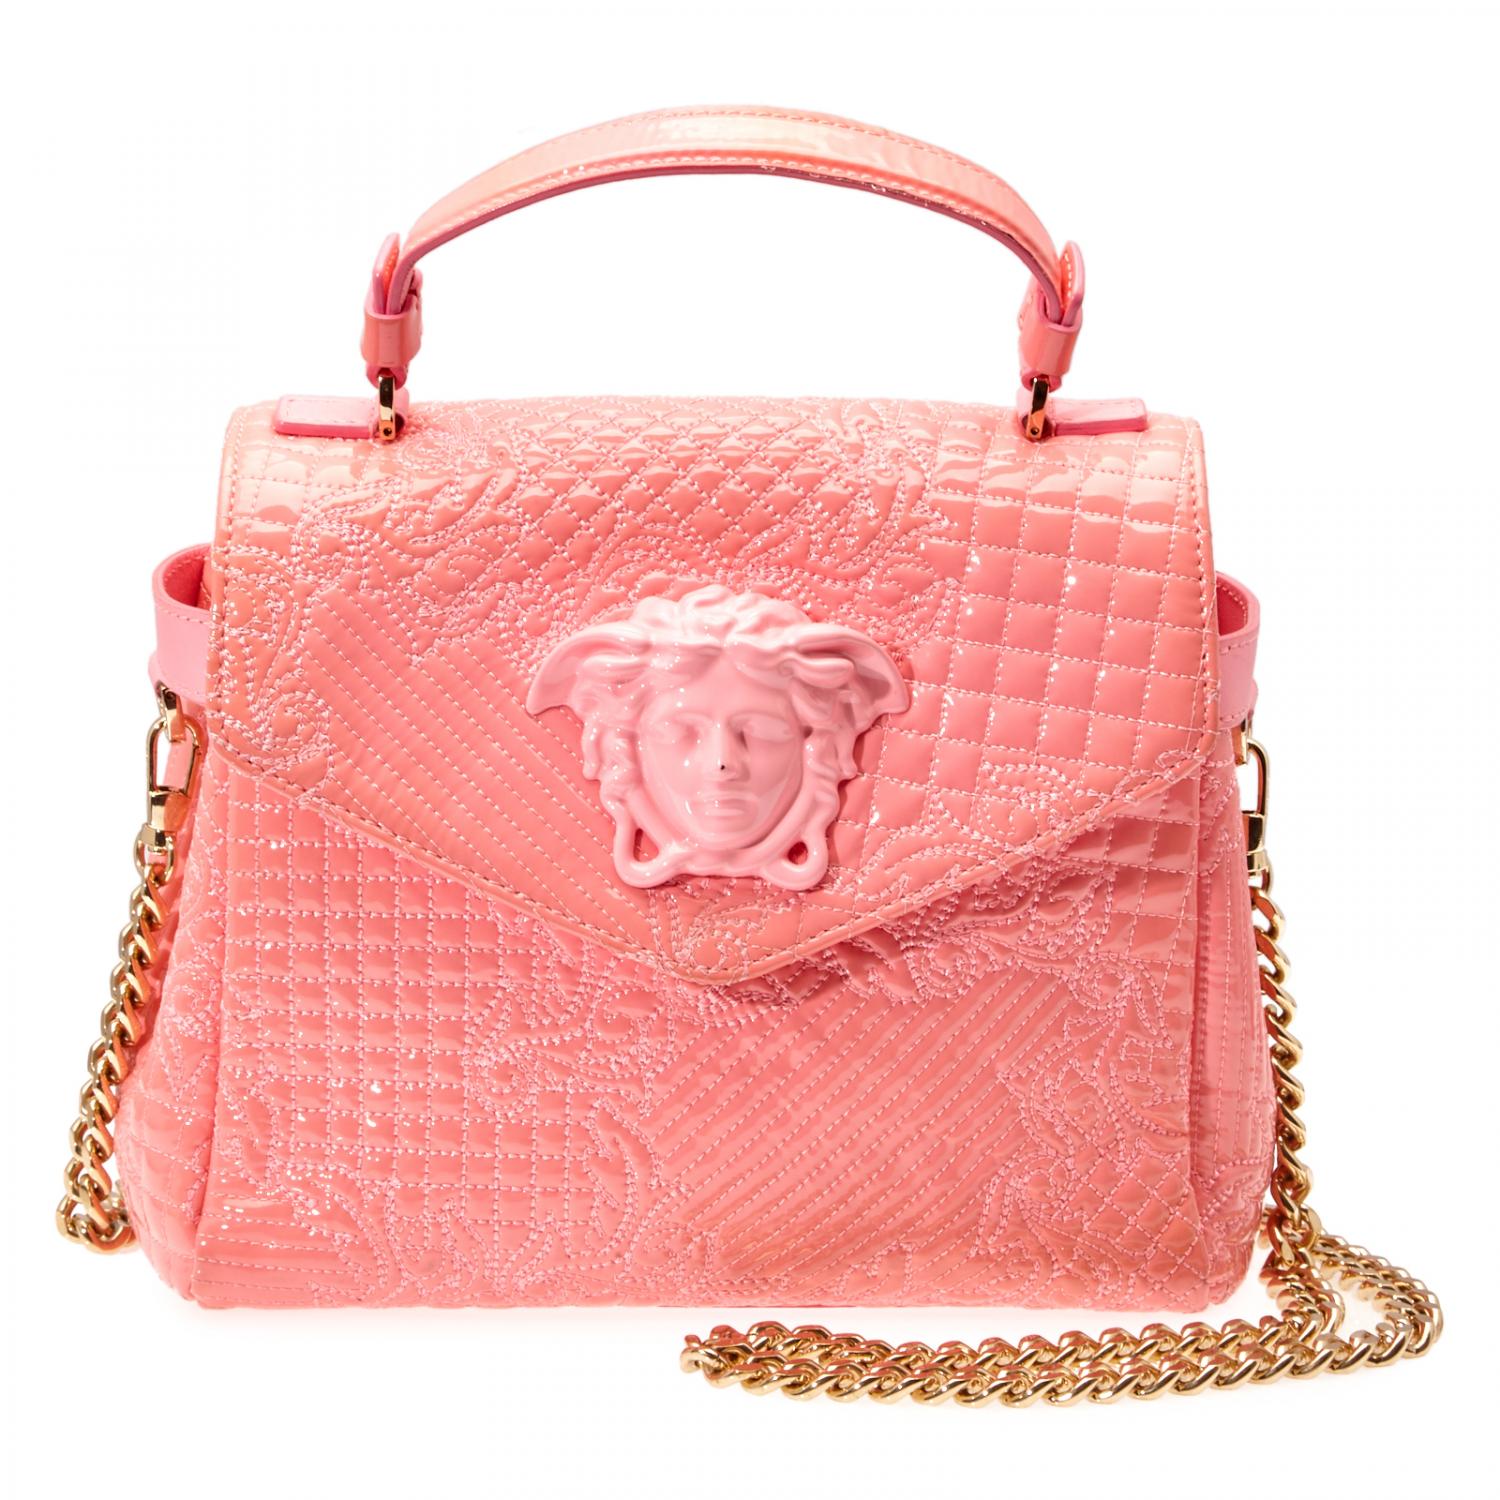 Versace Pink Medusa Bag - Price Estimate: $700 - $1500